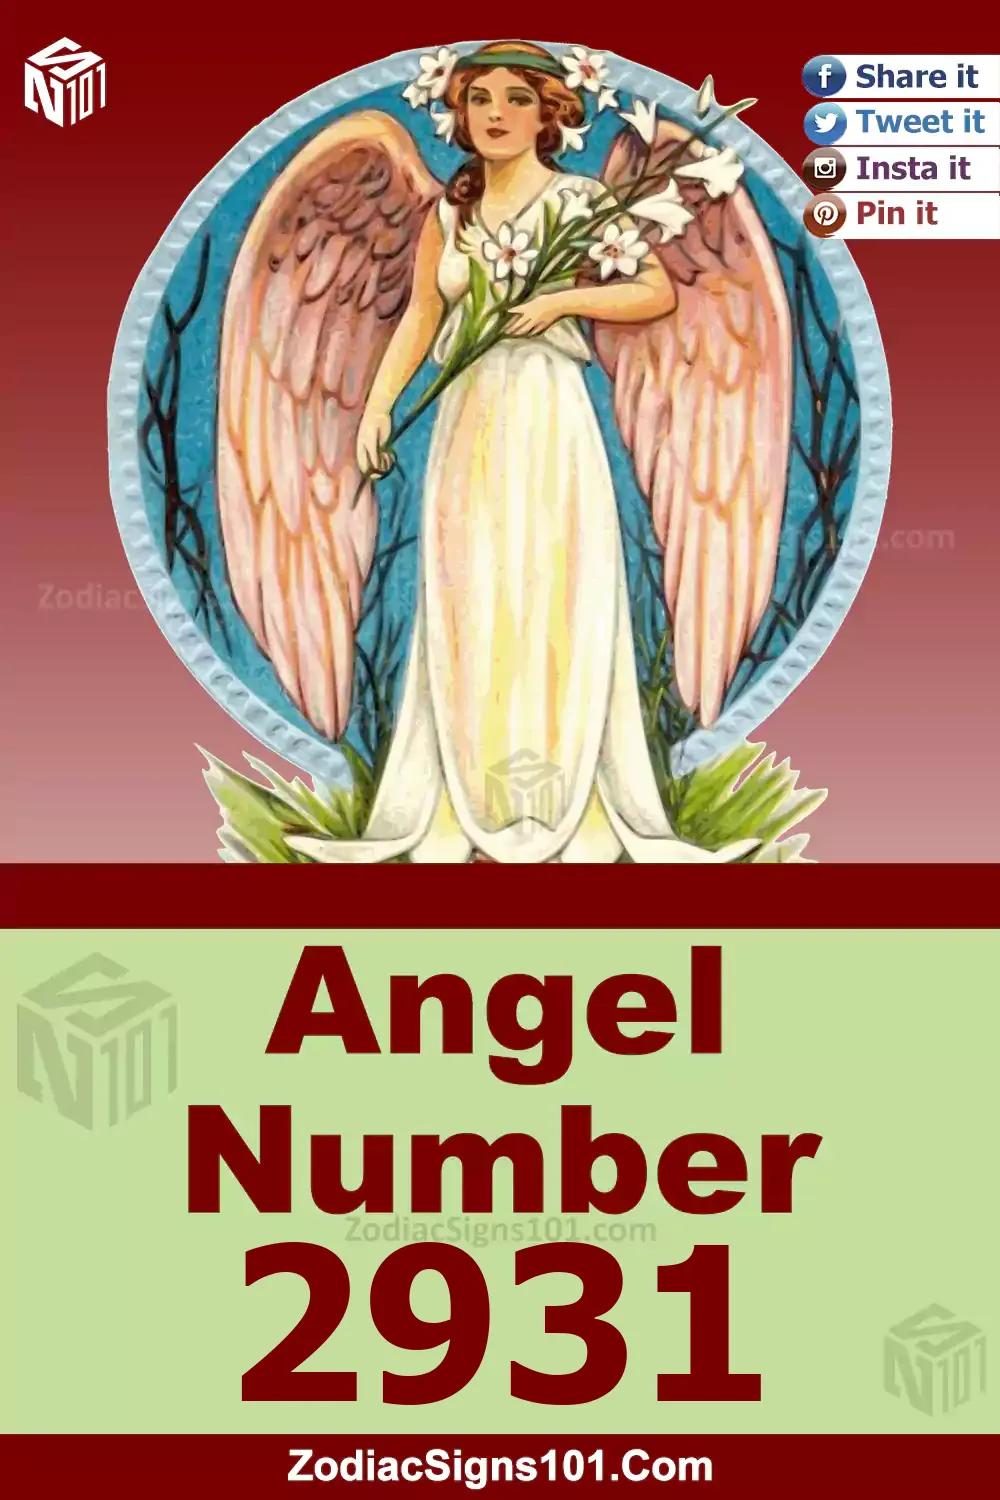 2931-Angel-Number-Meaning.jpg